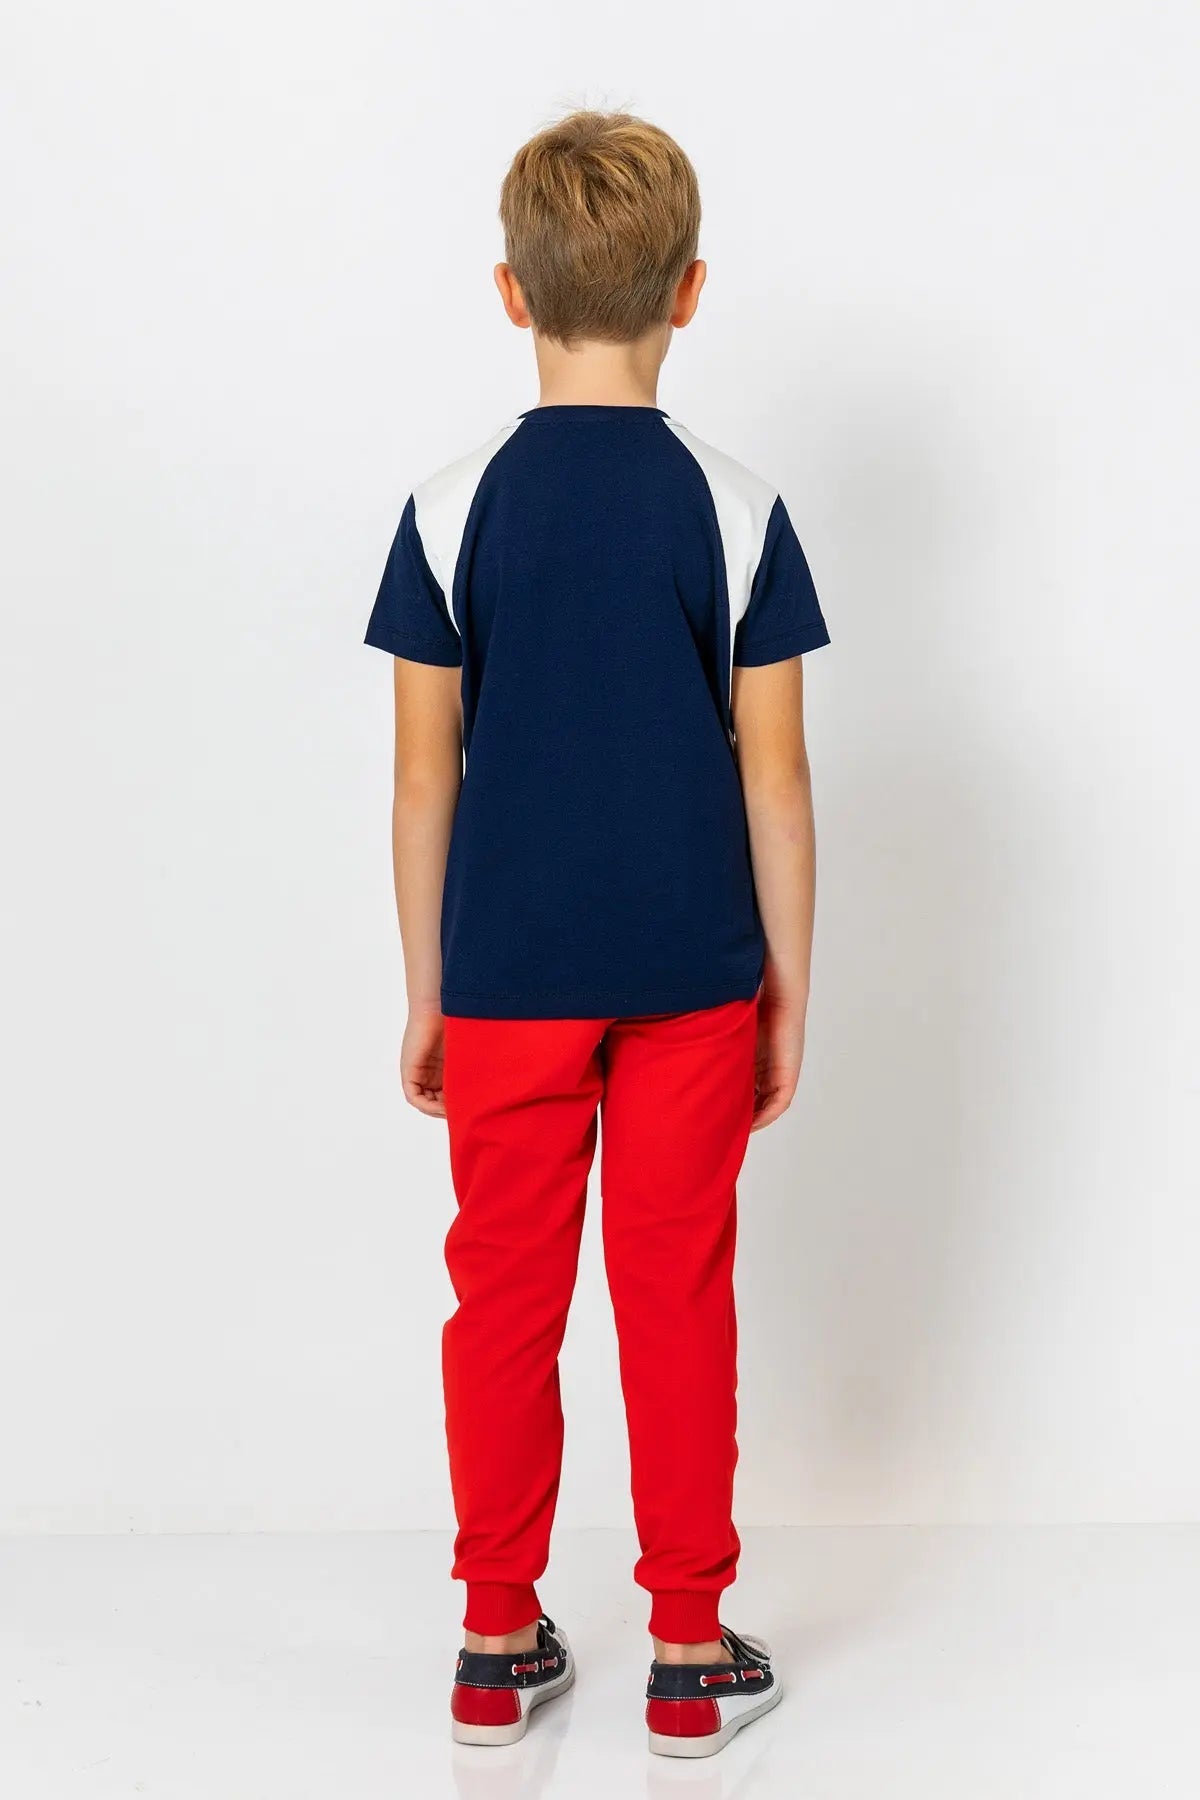 InCity Kids Boys Short Sleeve Printed Anchor T-Shirt InCity Boys & Girls